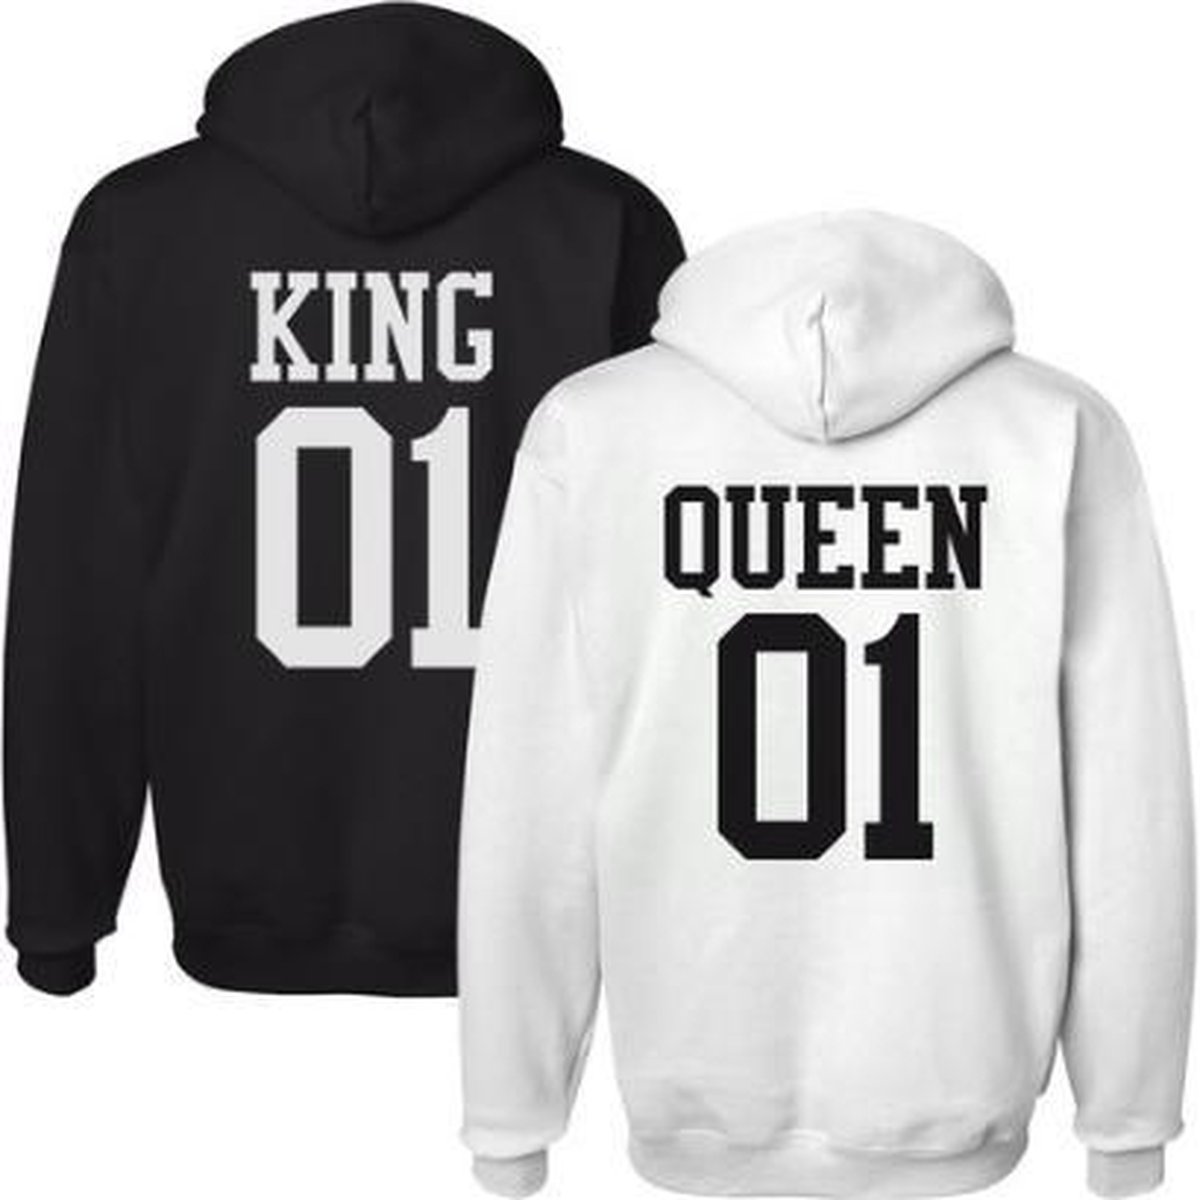 Hippe valentijn sweater | King & Queen sweater | 2 hoodies Black & White |